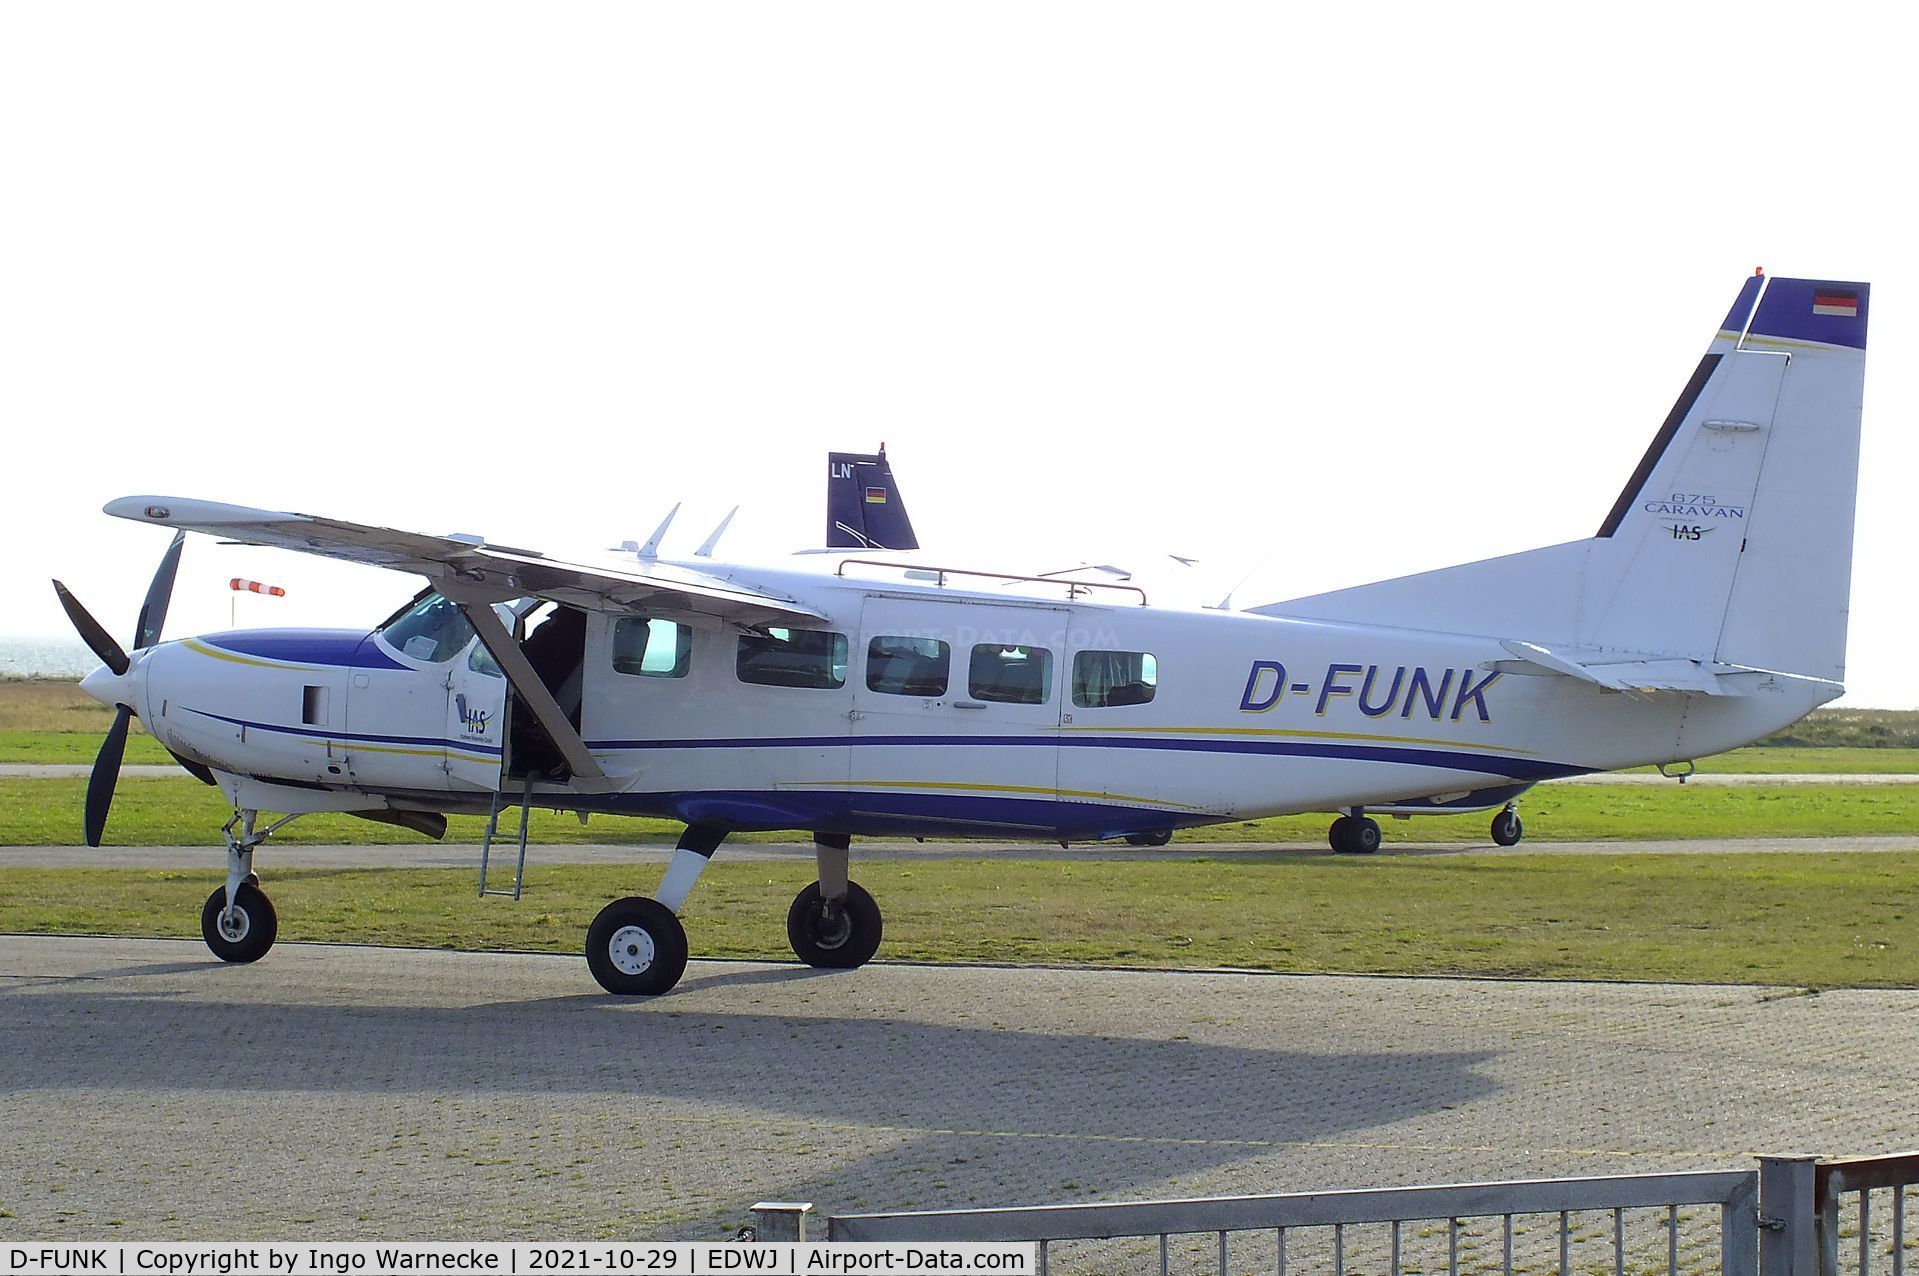 D-FUNK, 2007 Cessna 208 Caravan I C/N 20800407, Cessna 208 Caravan 675 of Itzehoer Airservice IAS at Juist airfield